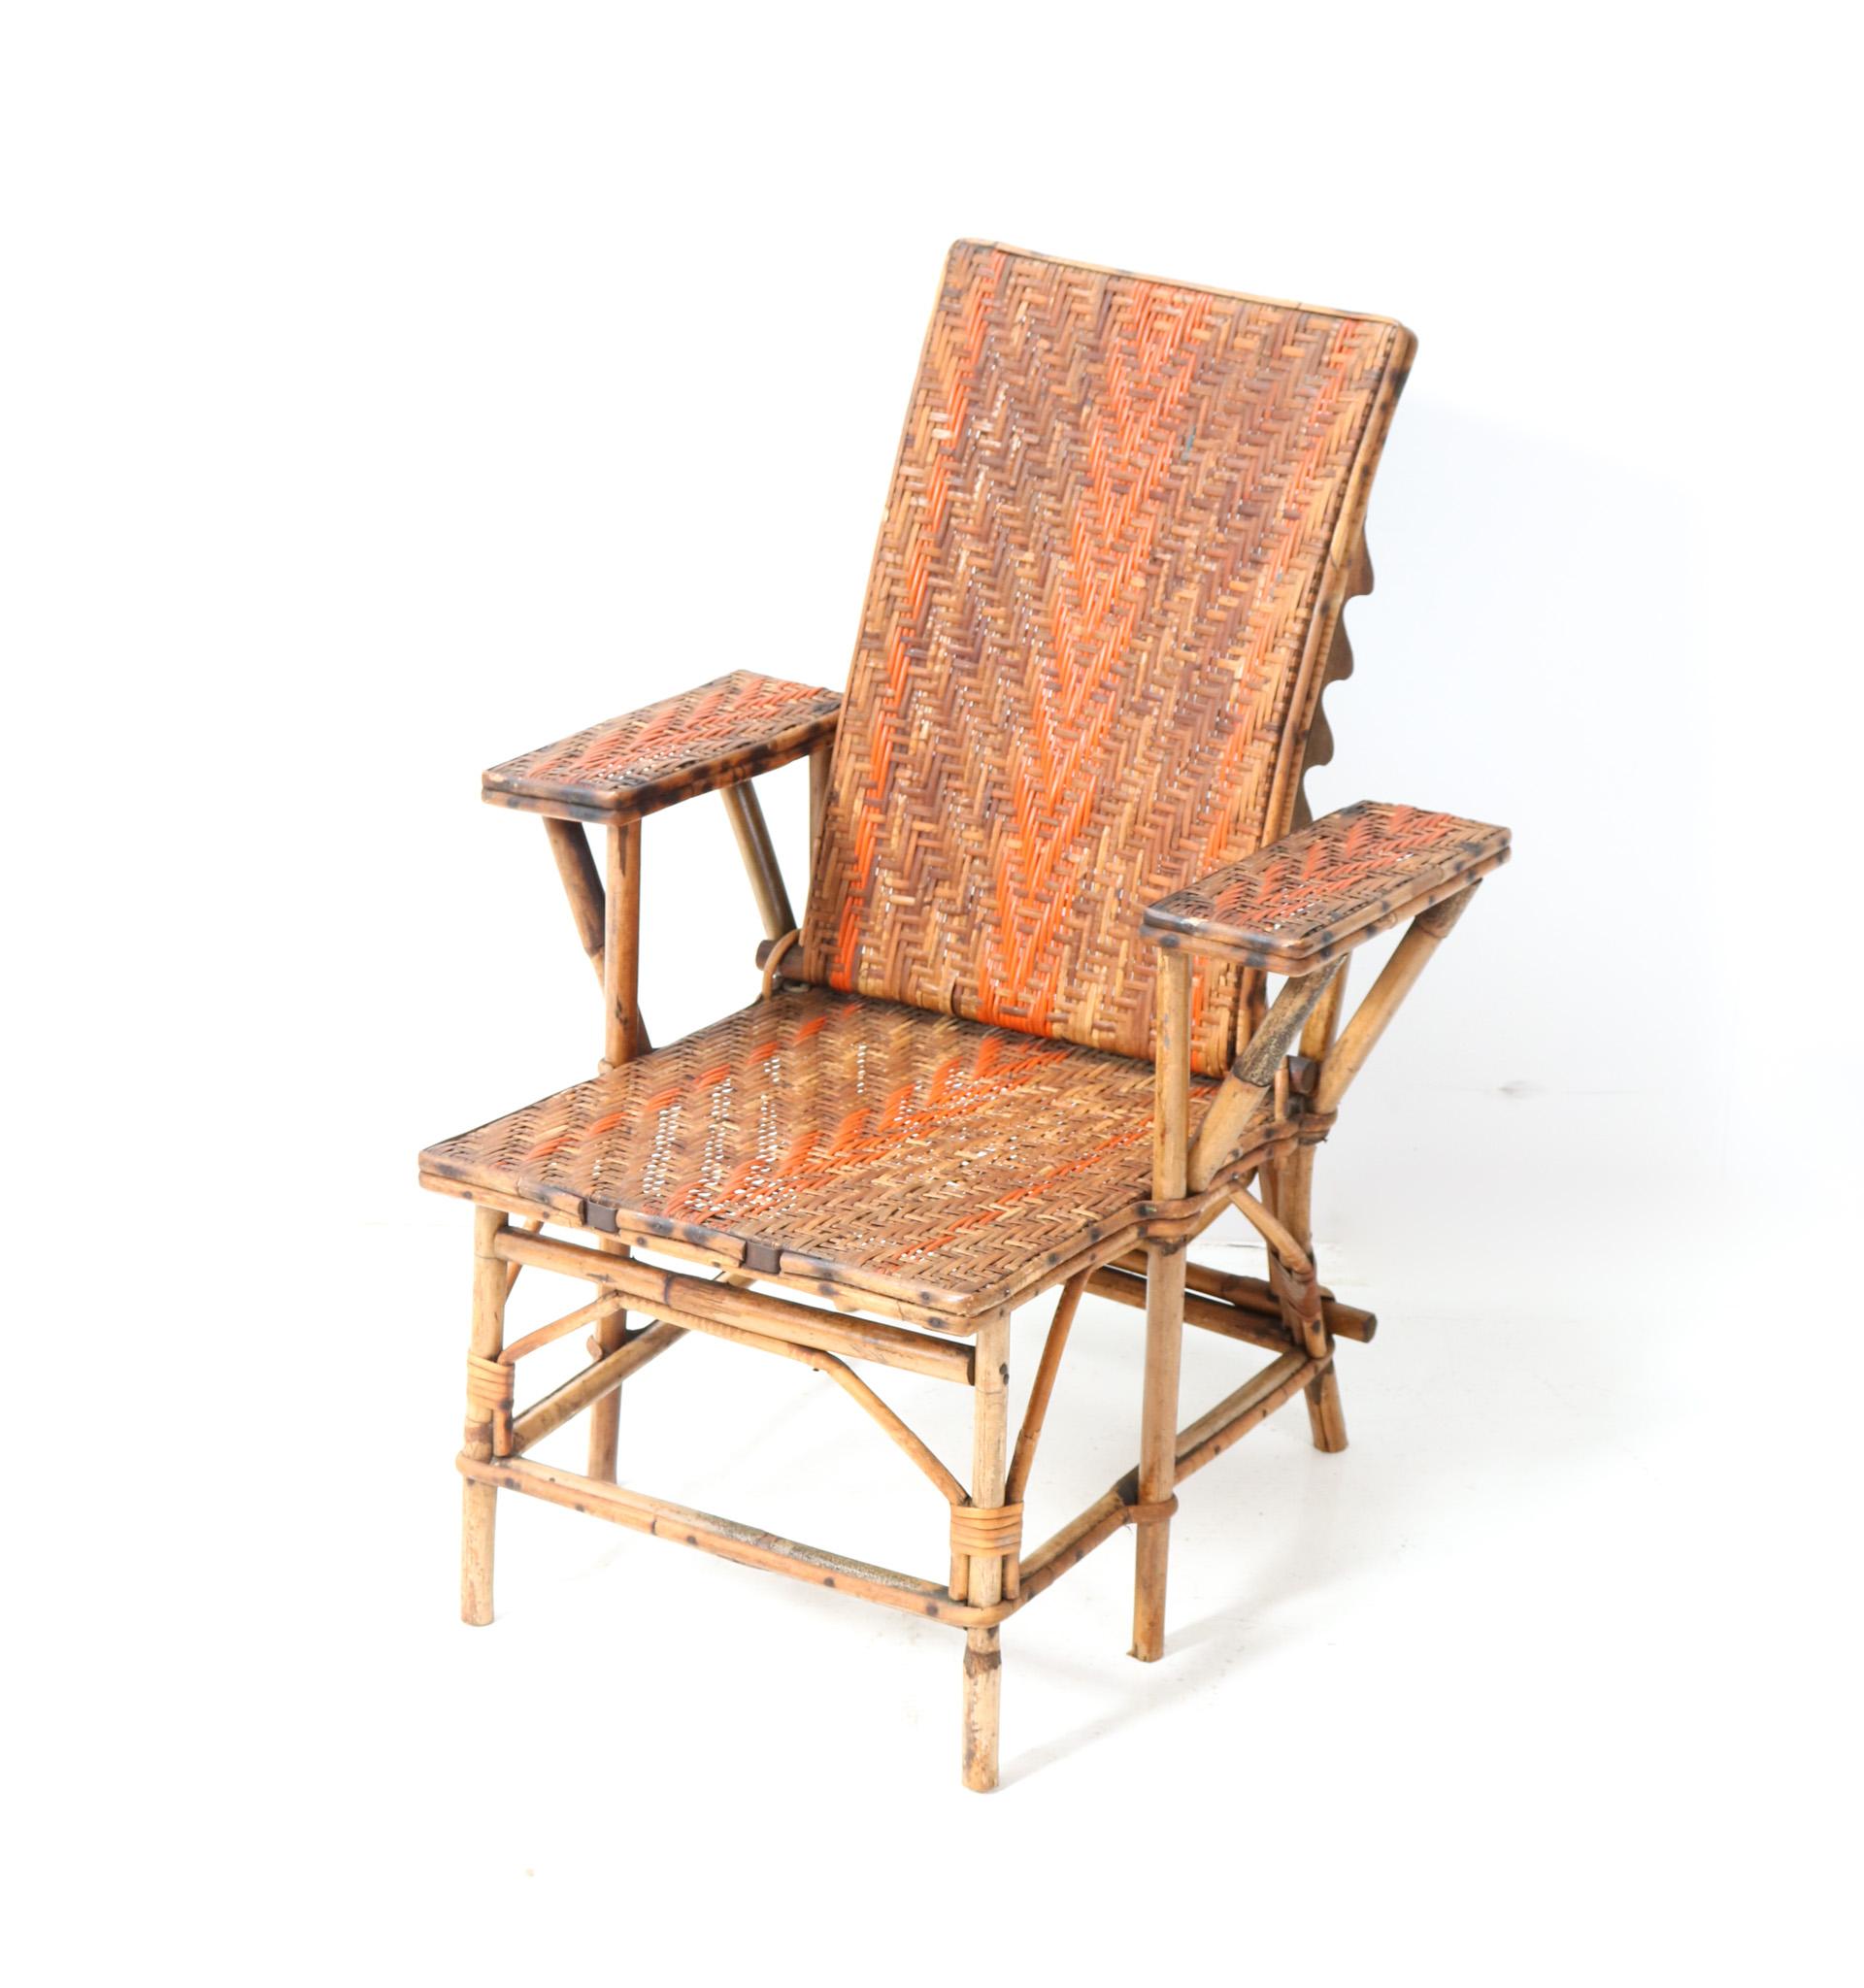 Klappbarer Jugendstil-Deckenstuhl oder Loungesessel aus Rattan, 1900er Jahre (Frühes 20. Jahrhundert) im Angebot